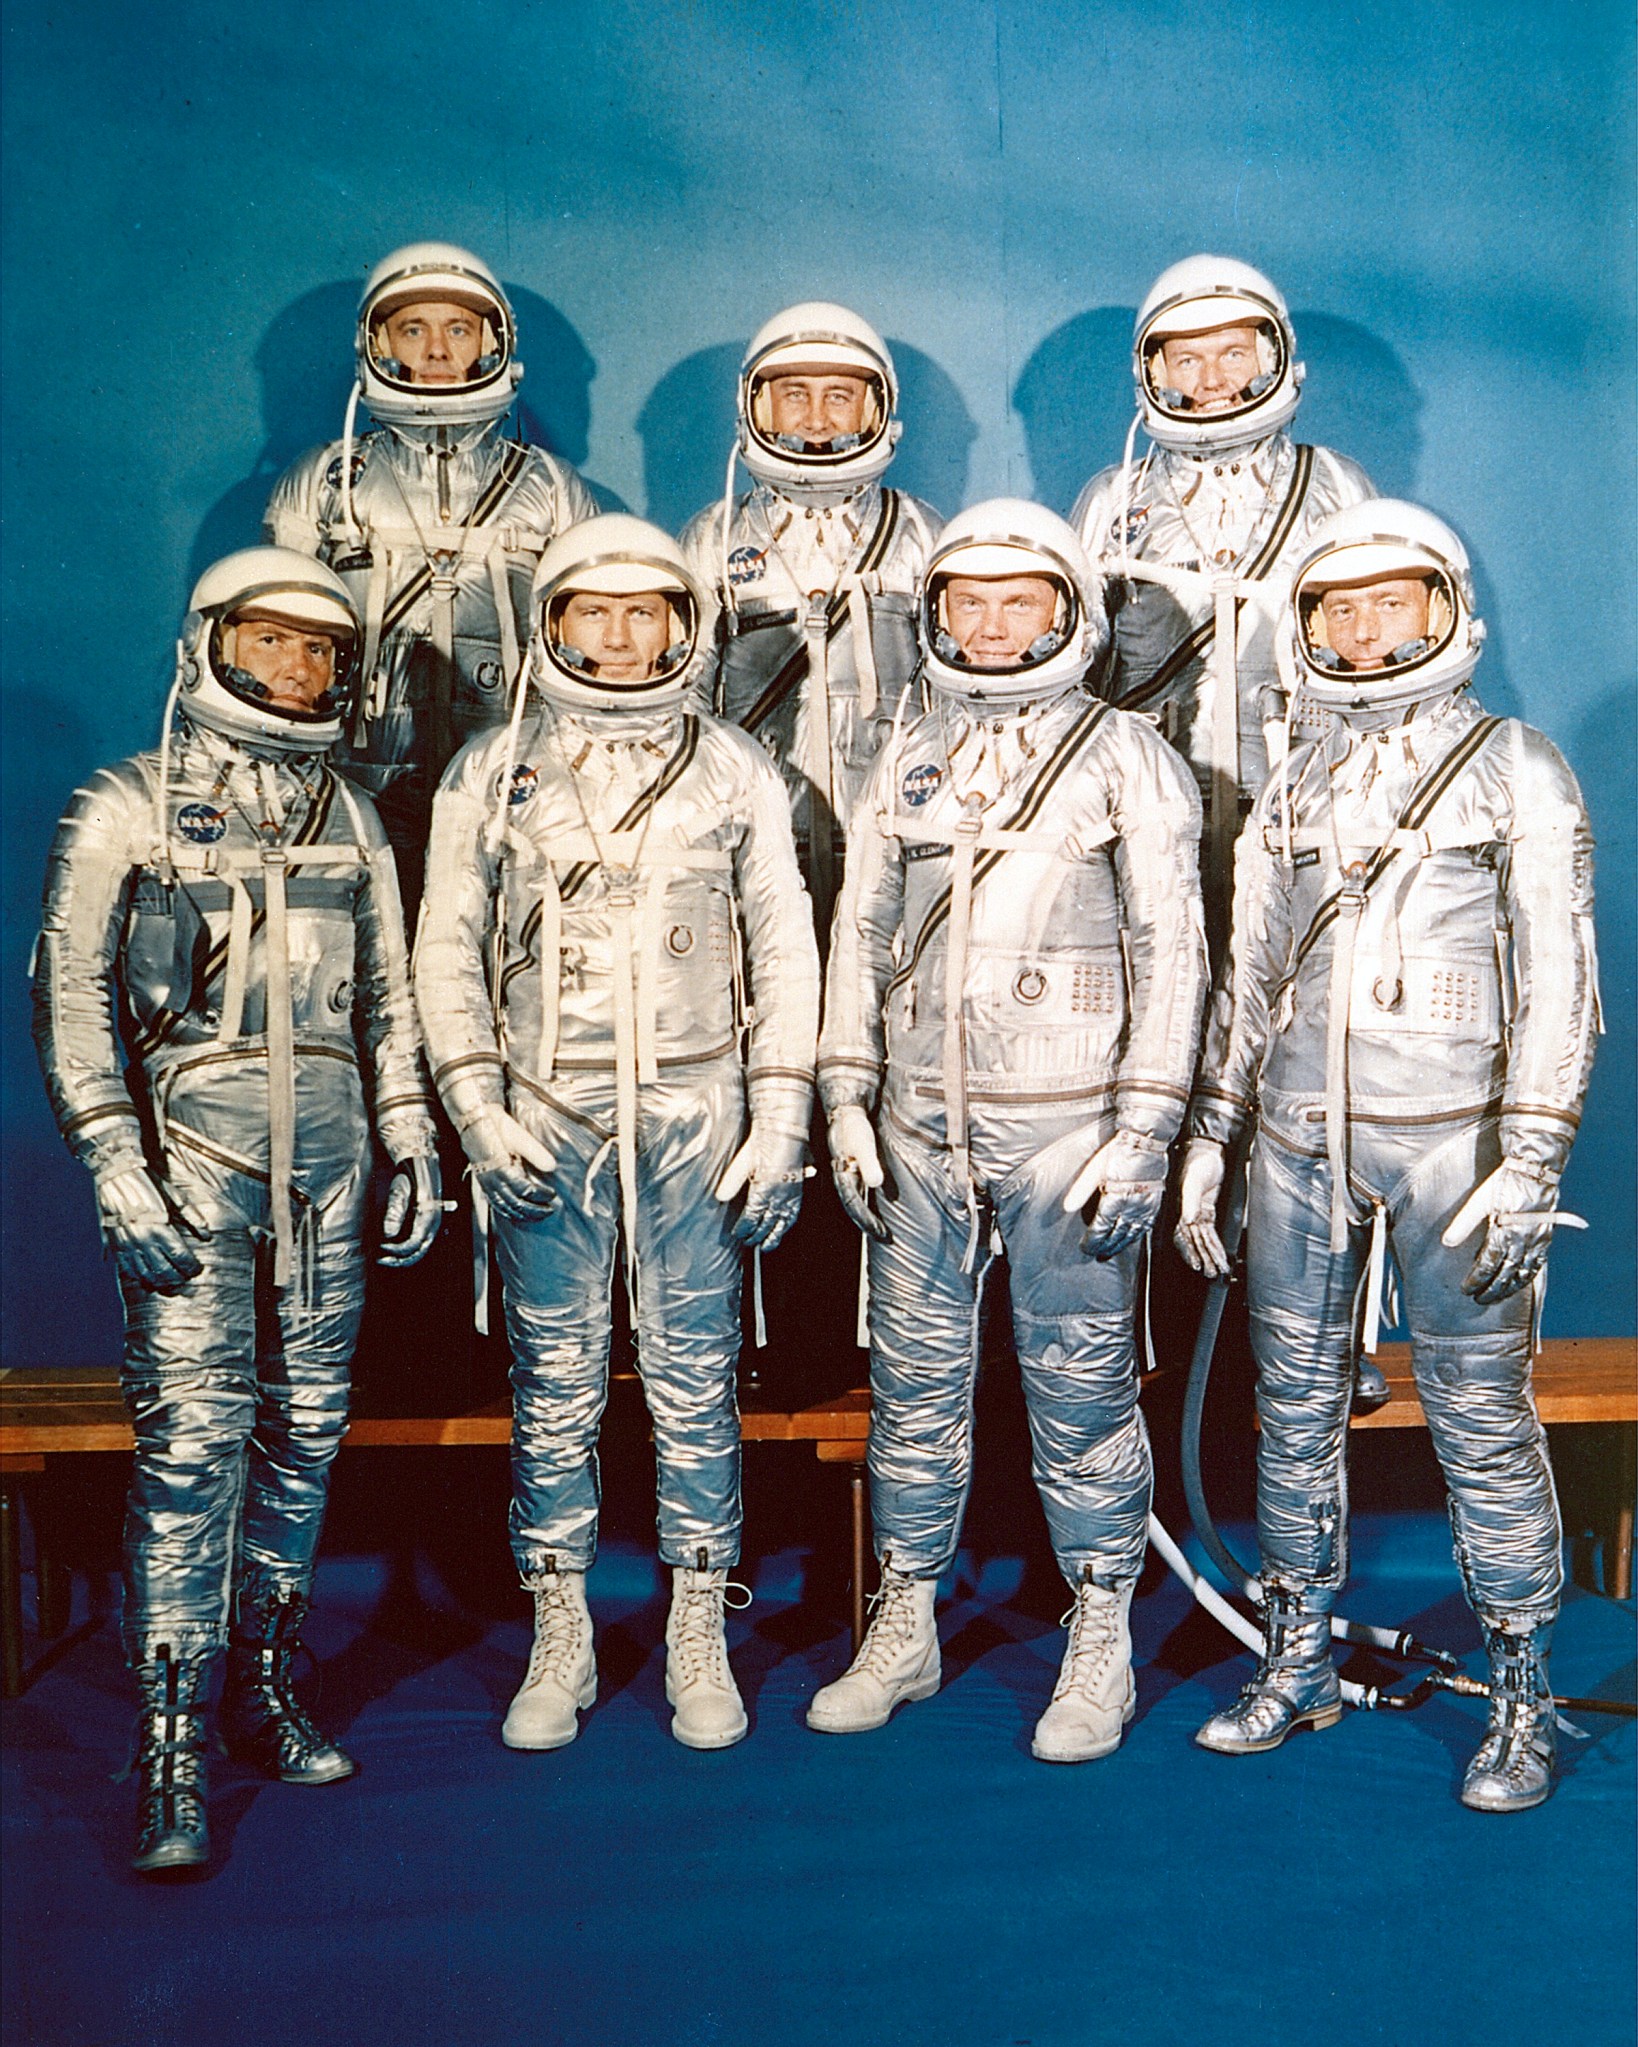 A photo of seven project Mercury astronauts